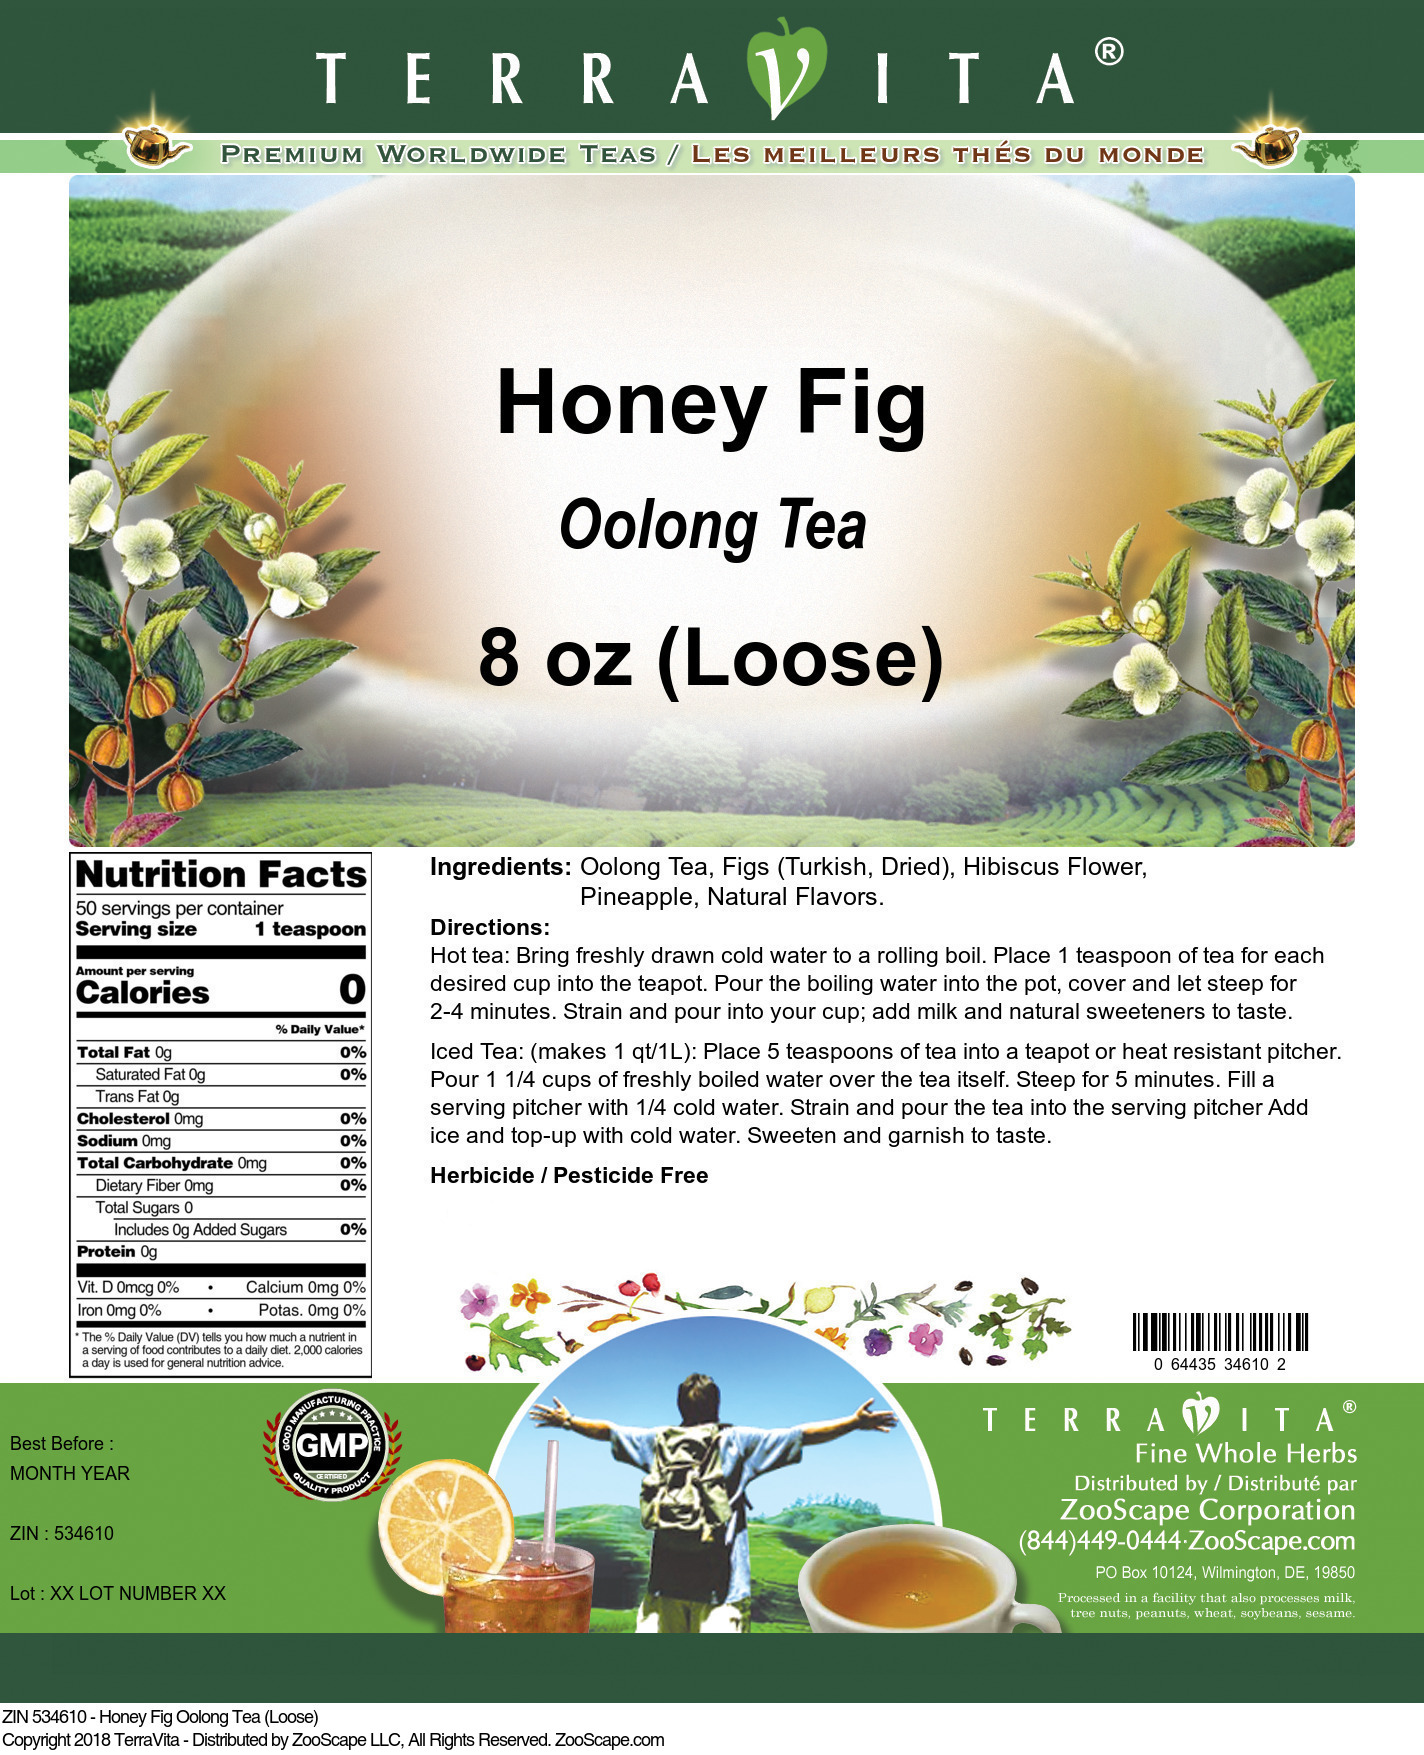 Honey Fig Oolong Tea (Loose) - Label